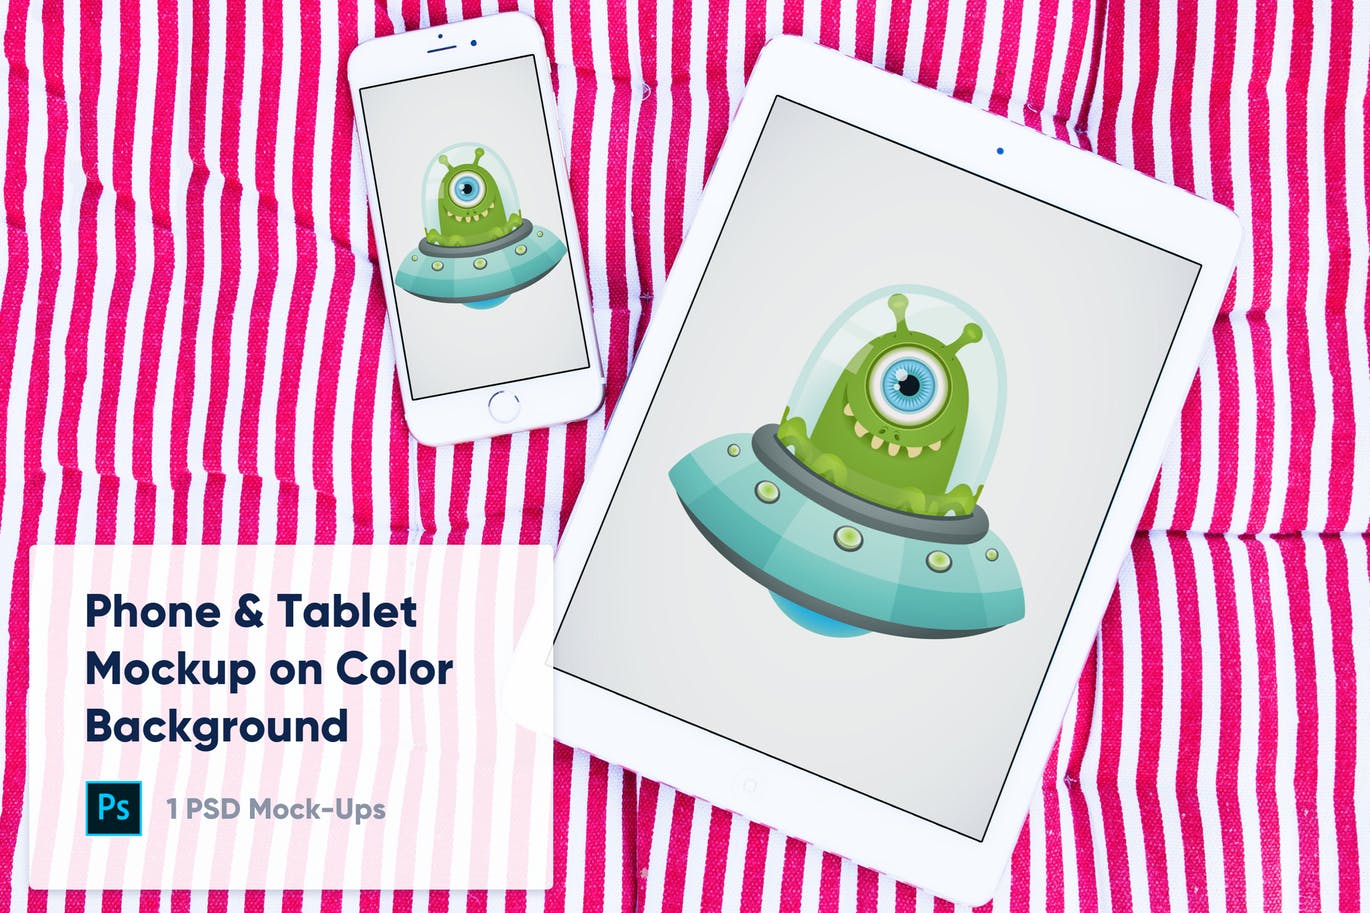 彩色背景平板电脑&手机第一素材精选样机模板 1 Tablet & Phone Mockup on Color Background插图